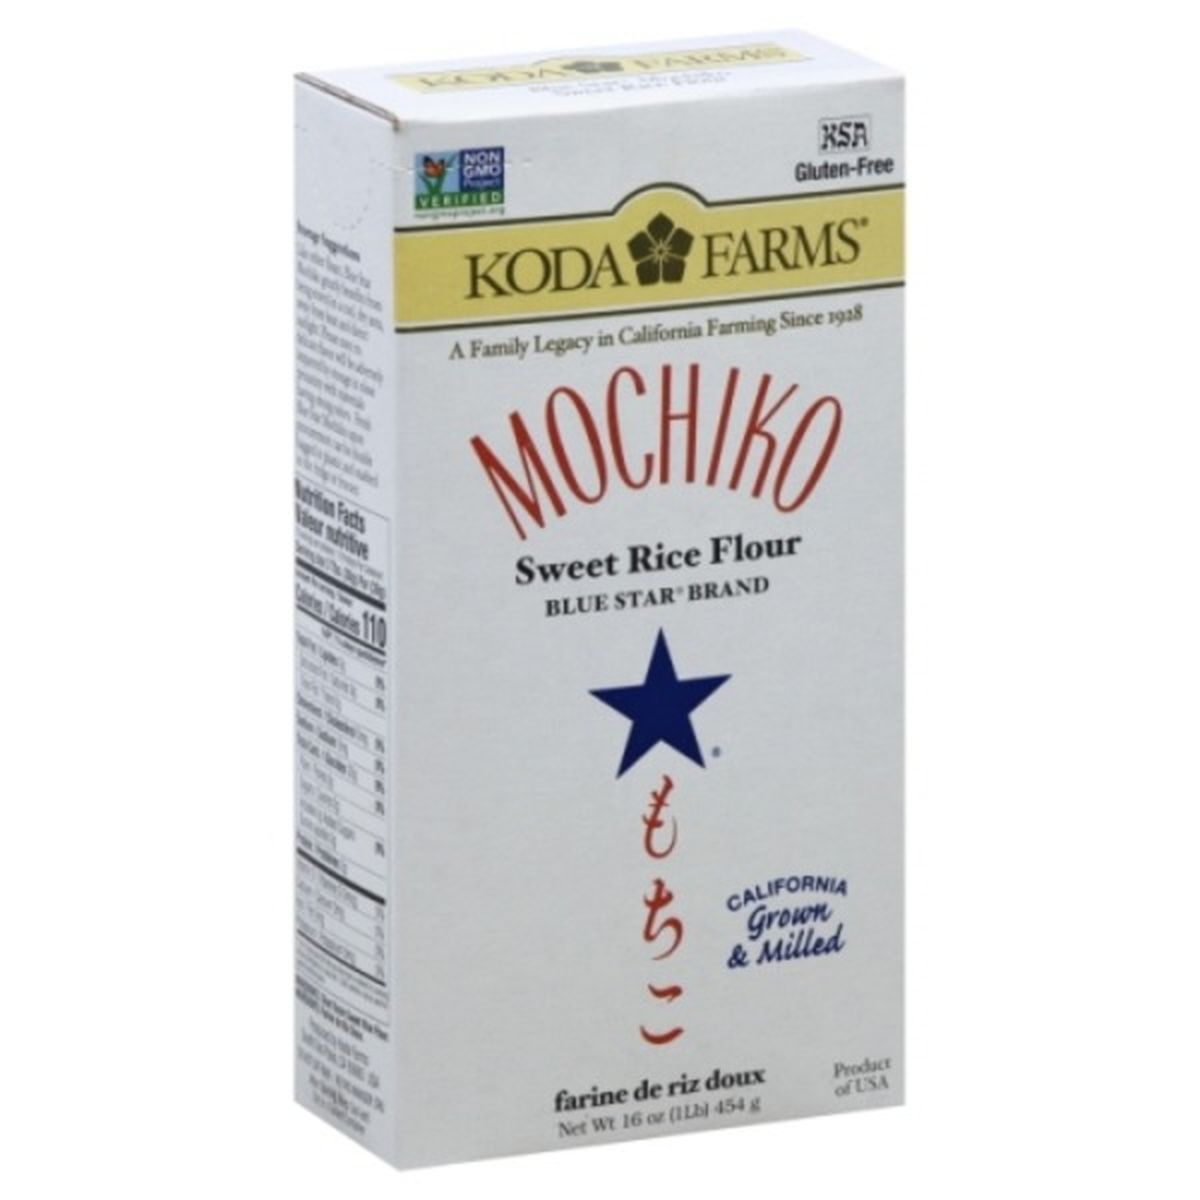 Calories in Koda Farms Rice Flour, Sweet, Mochiko, Blue Star Brand